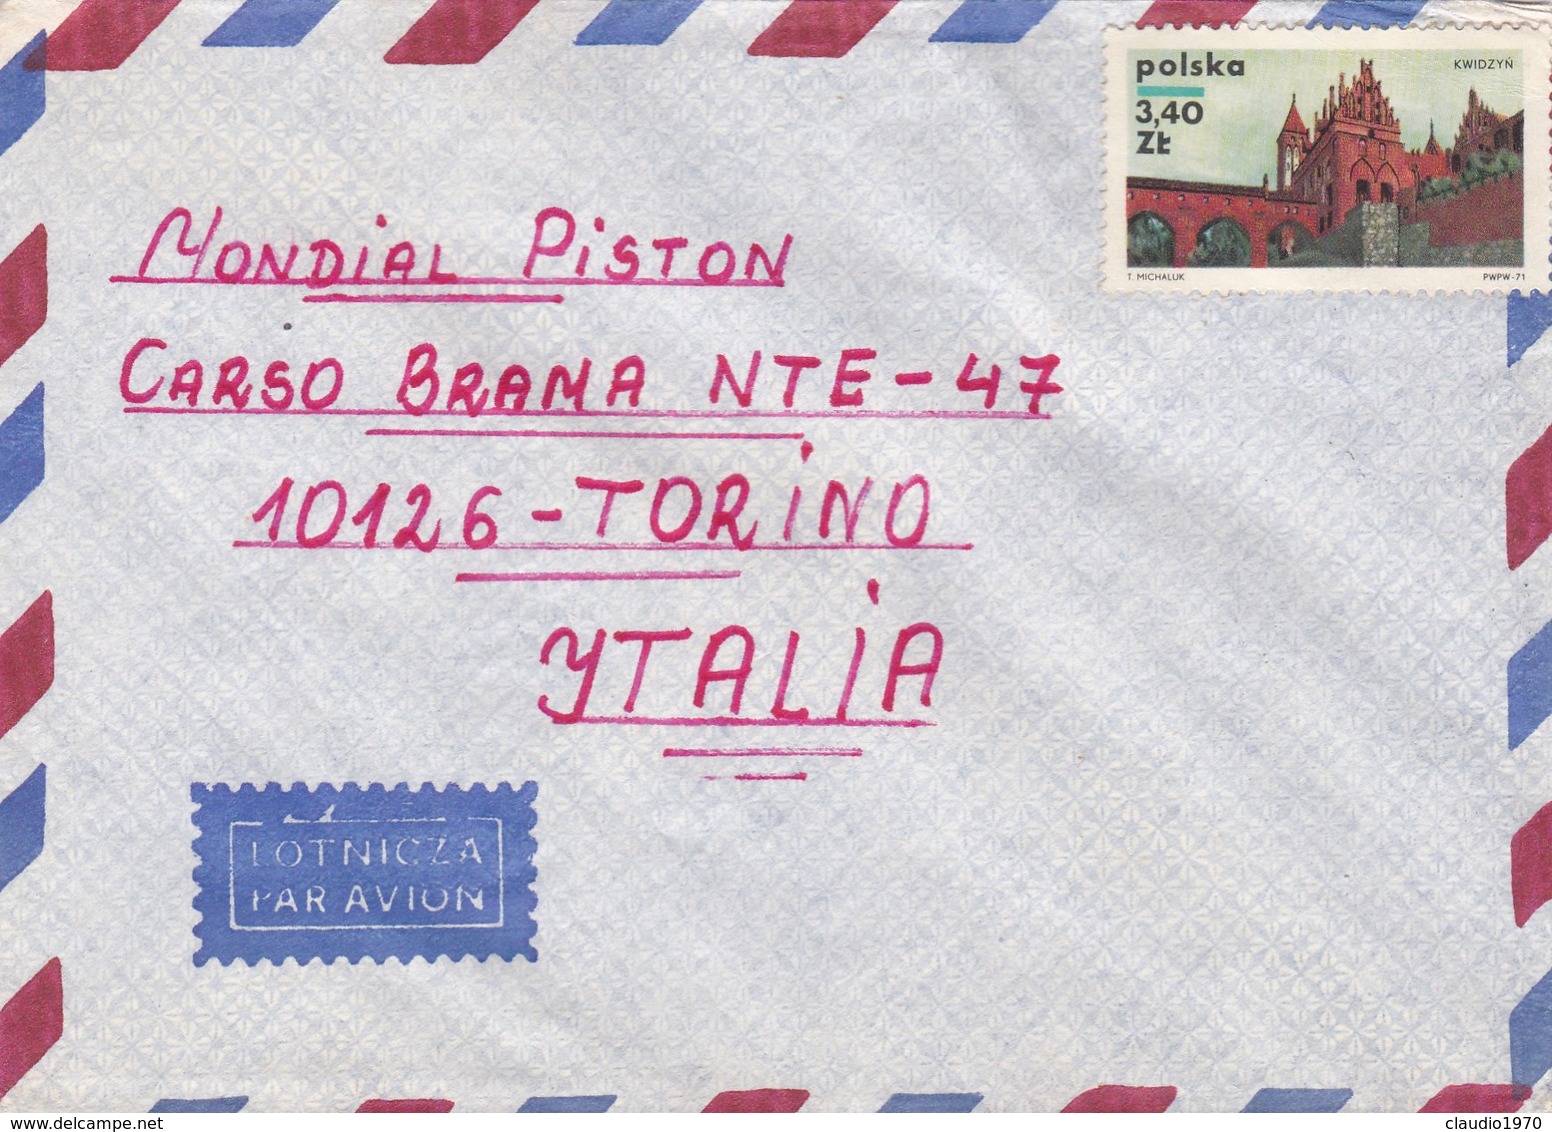 BUSTA VIAGGIATA PAR AVION - POLONIA  - VIAGGIATA PER MONDIAL PISTON -TORINO / ITALIA - Storia Postale